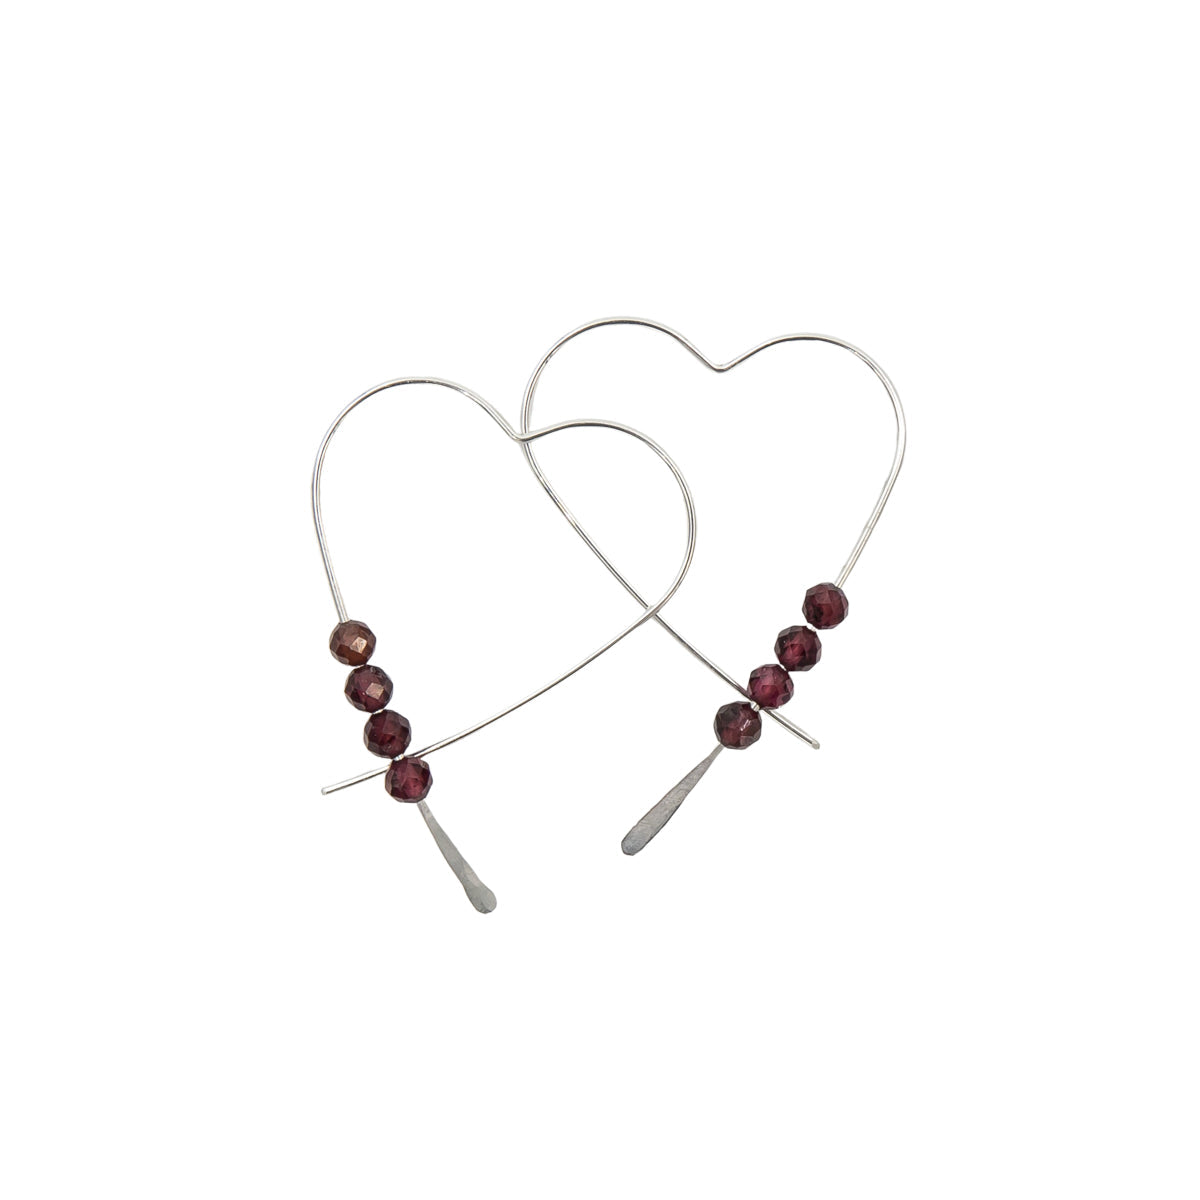 Earth Song Jewelry Handmade Sterling Silver Heart Earrings with Garnet stones